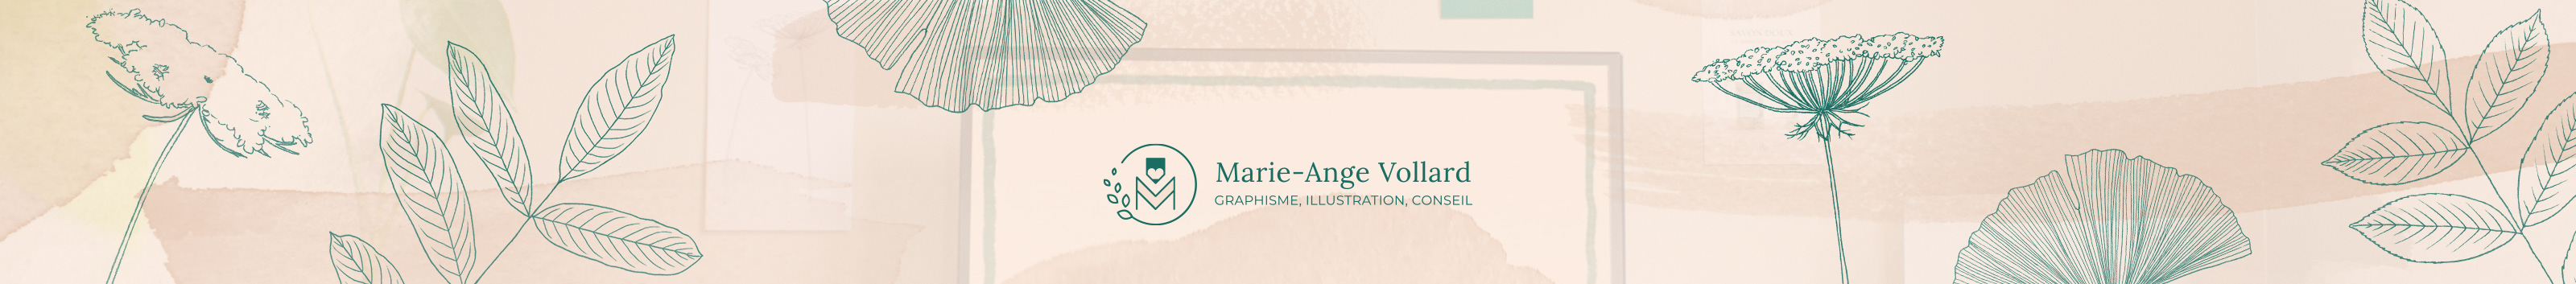 Marie-Ange Vollard's profile banner